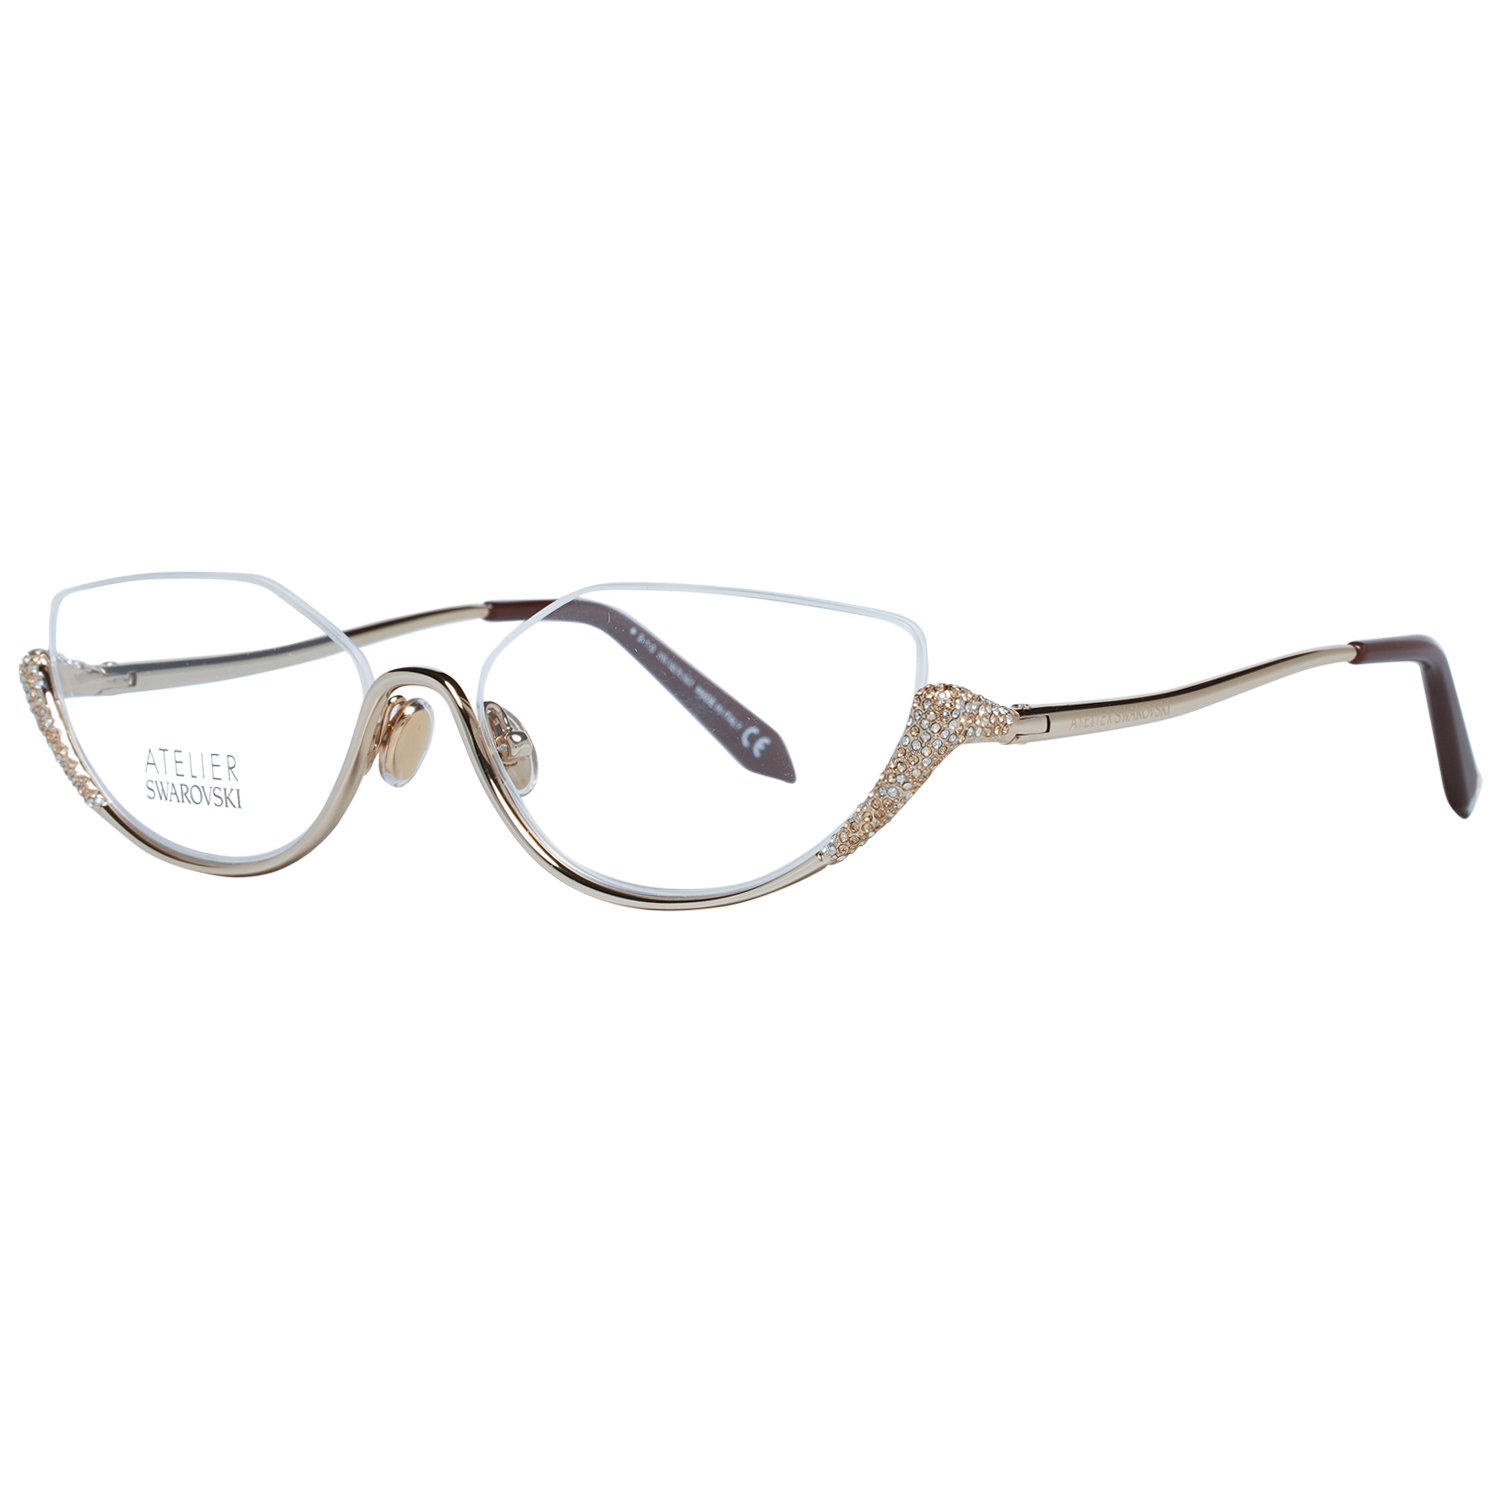 Atelier Swarovski Frames Atelier Swarovski Glasses Optical Frame SK5359-P 032 Eyeglasses Eyewear UK USA Australia 